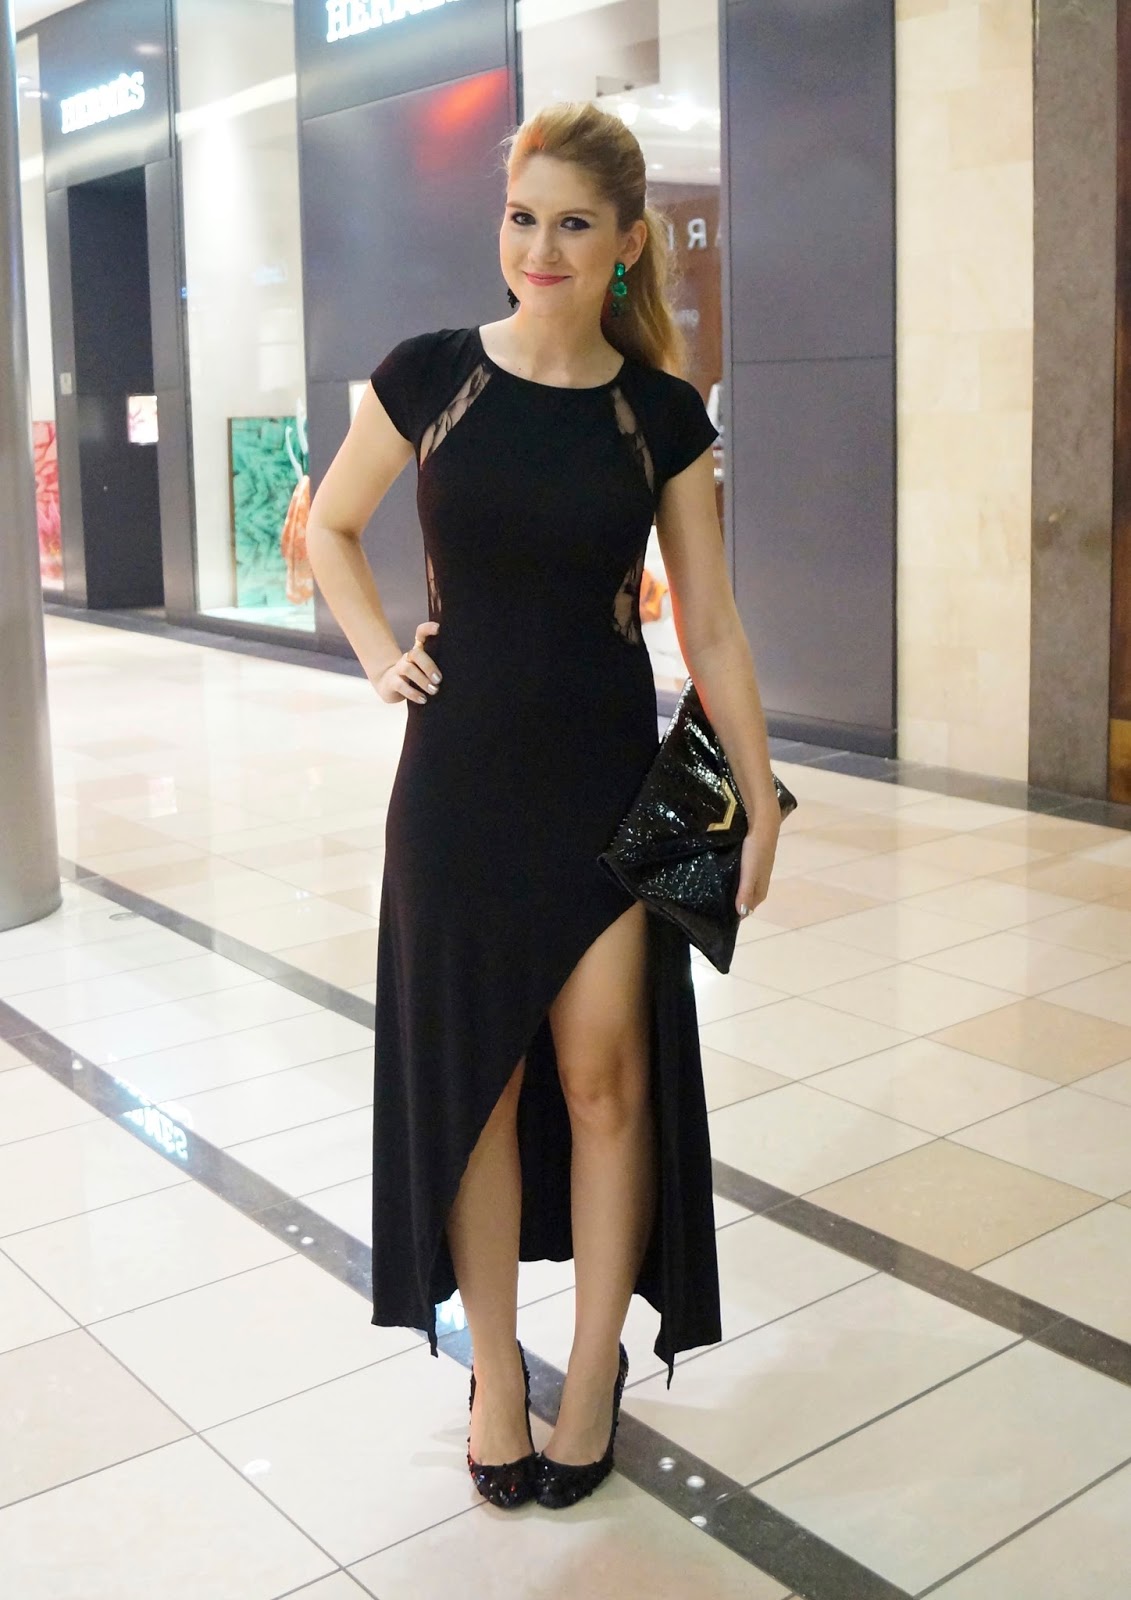 Elegant Black Dress Outfit